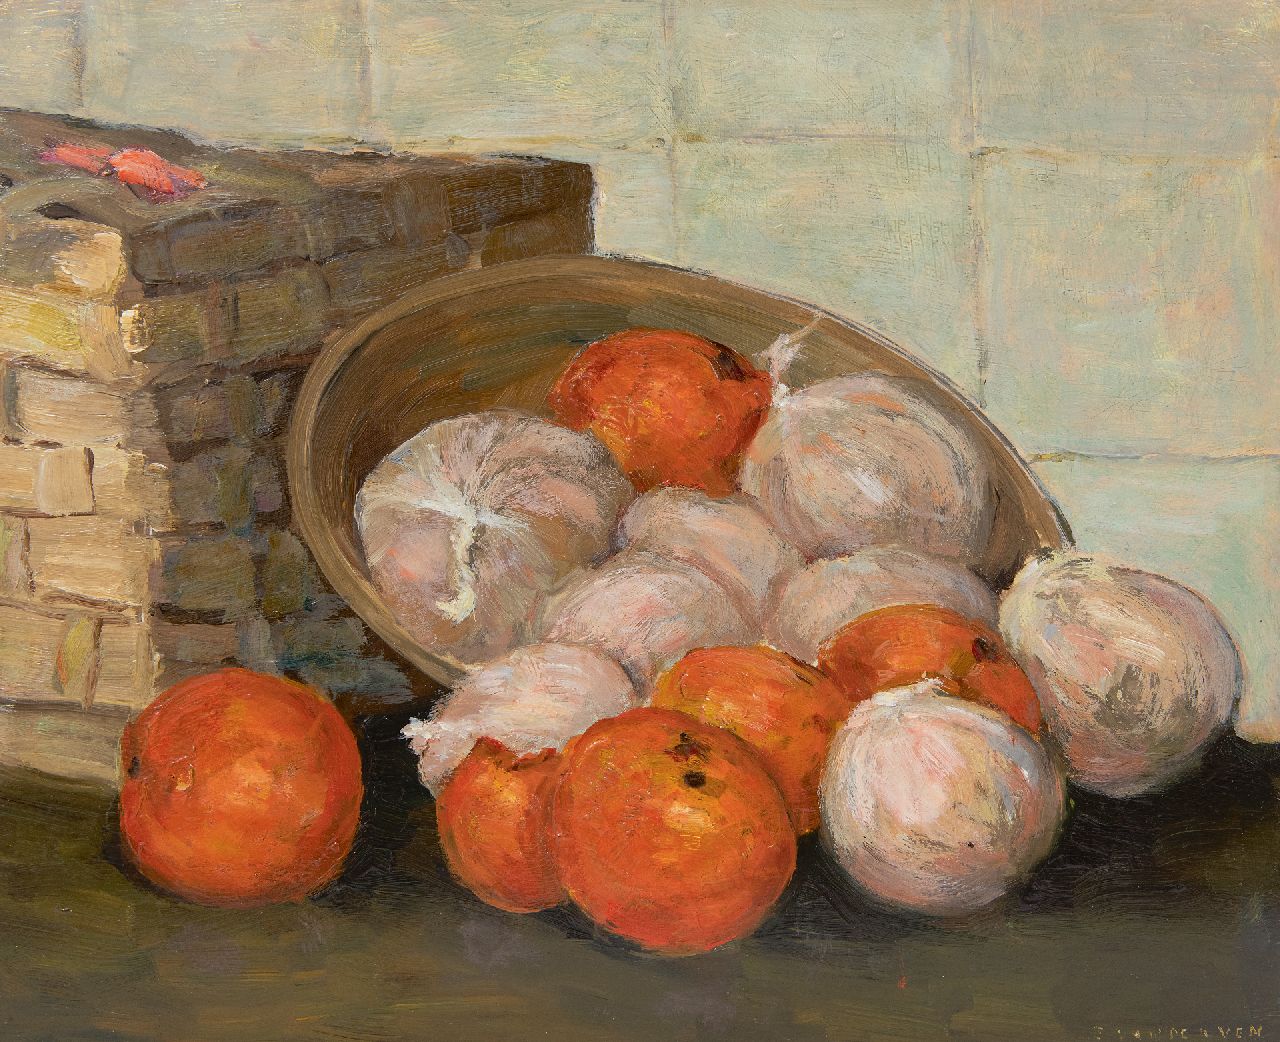 Manus van der Ven | Still life with mandarins, oil on board, 30.4 x 37.2 cm, signed l.r.